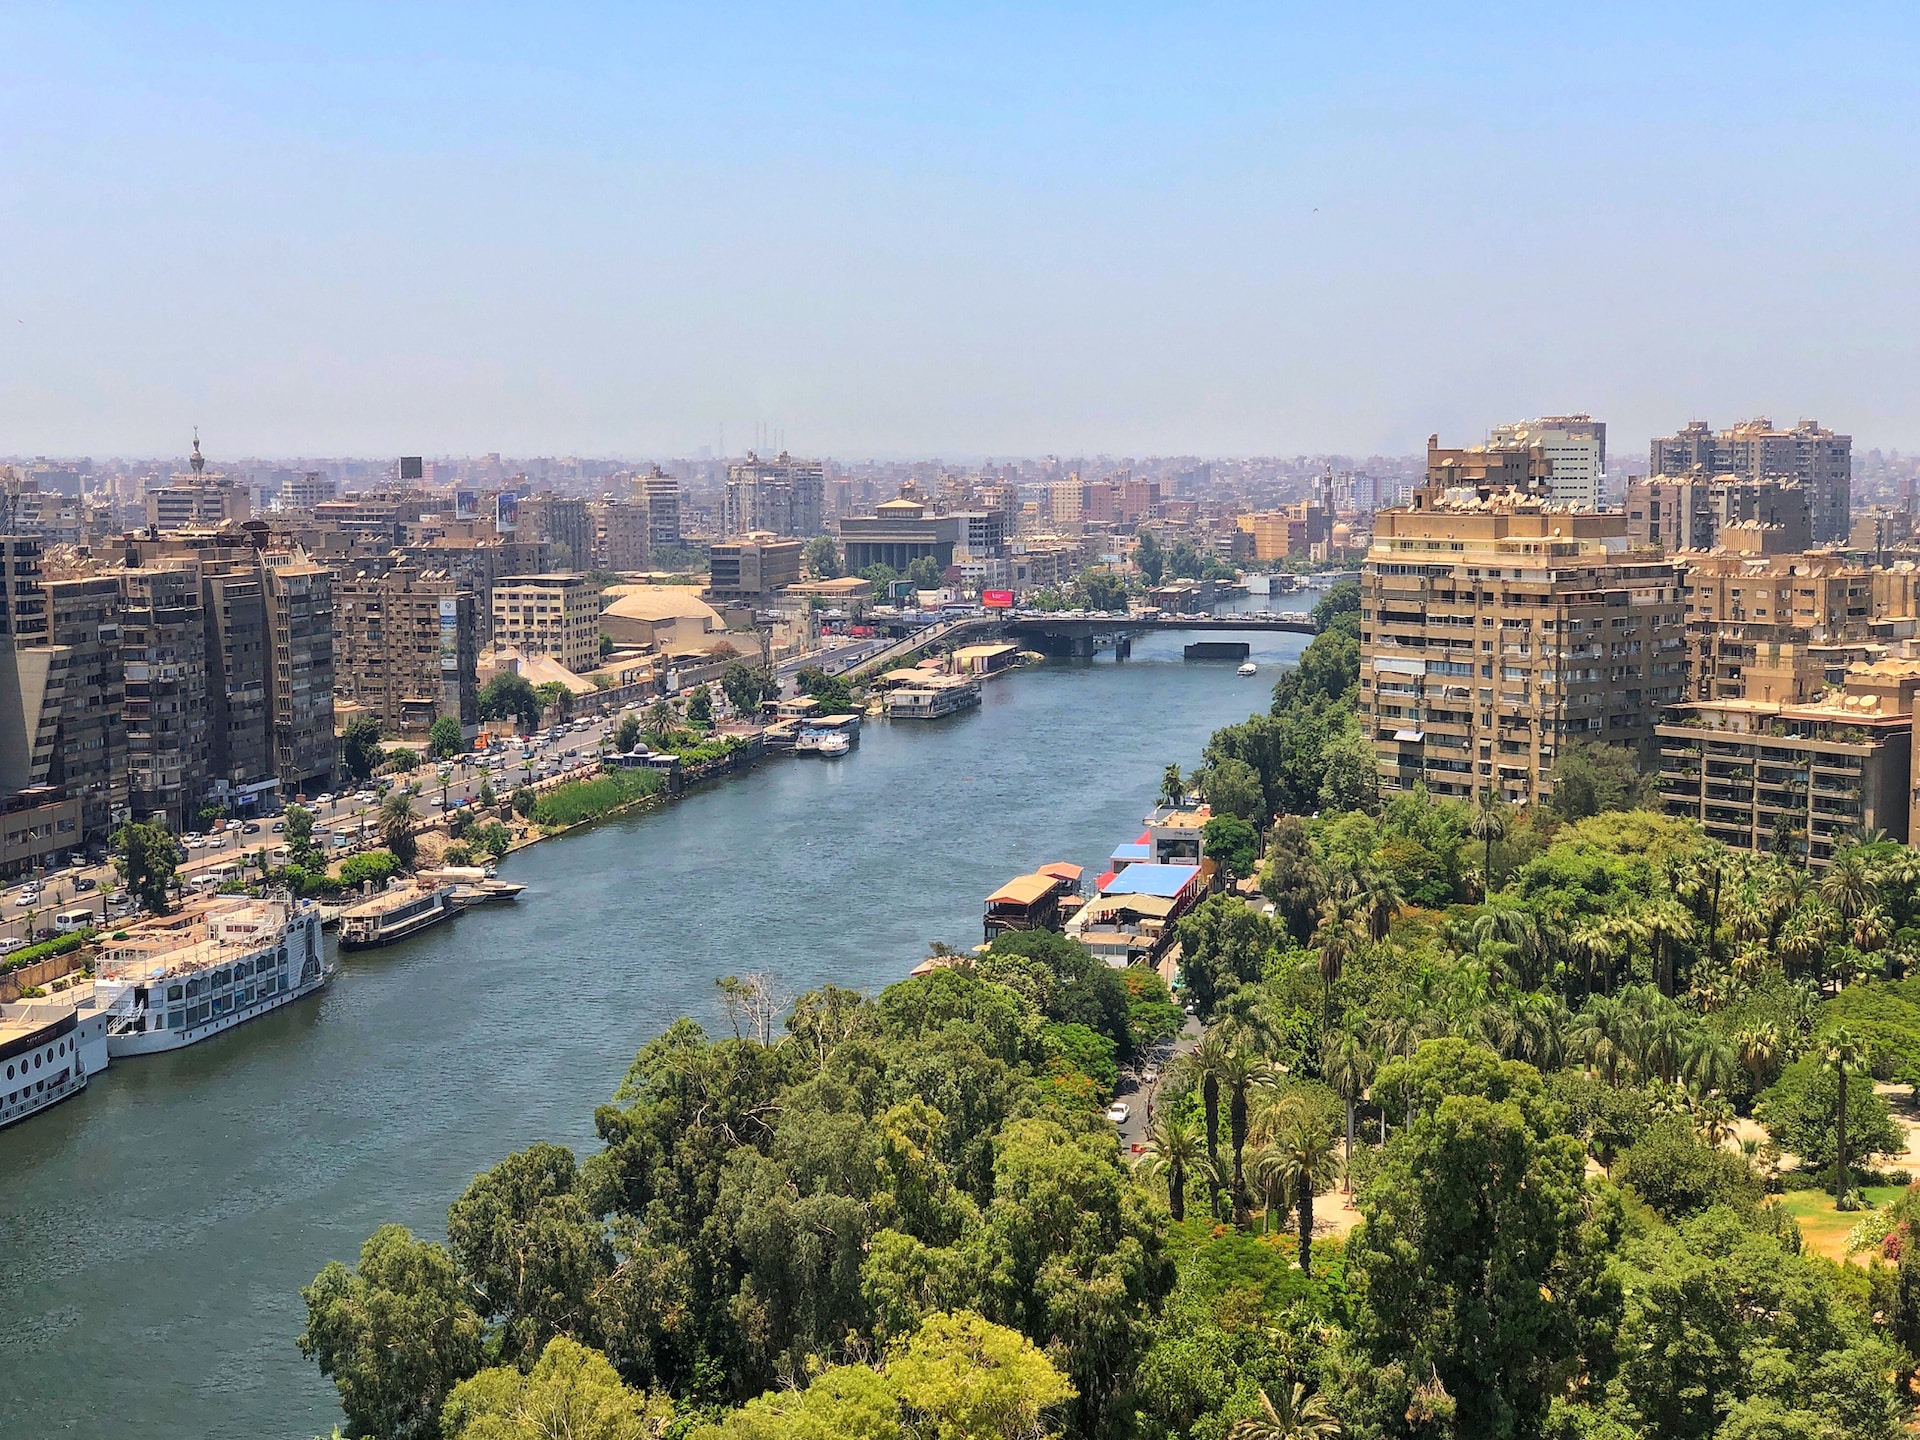 The Nile River flows through Cairo in Egypt (photo: Sherif Moharram)